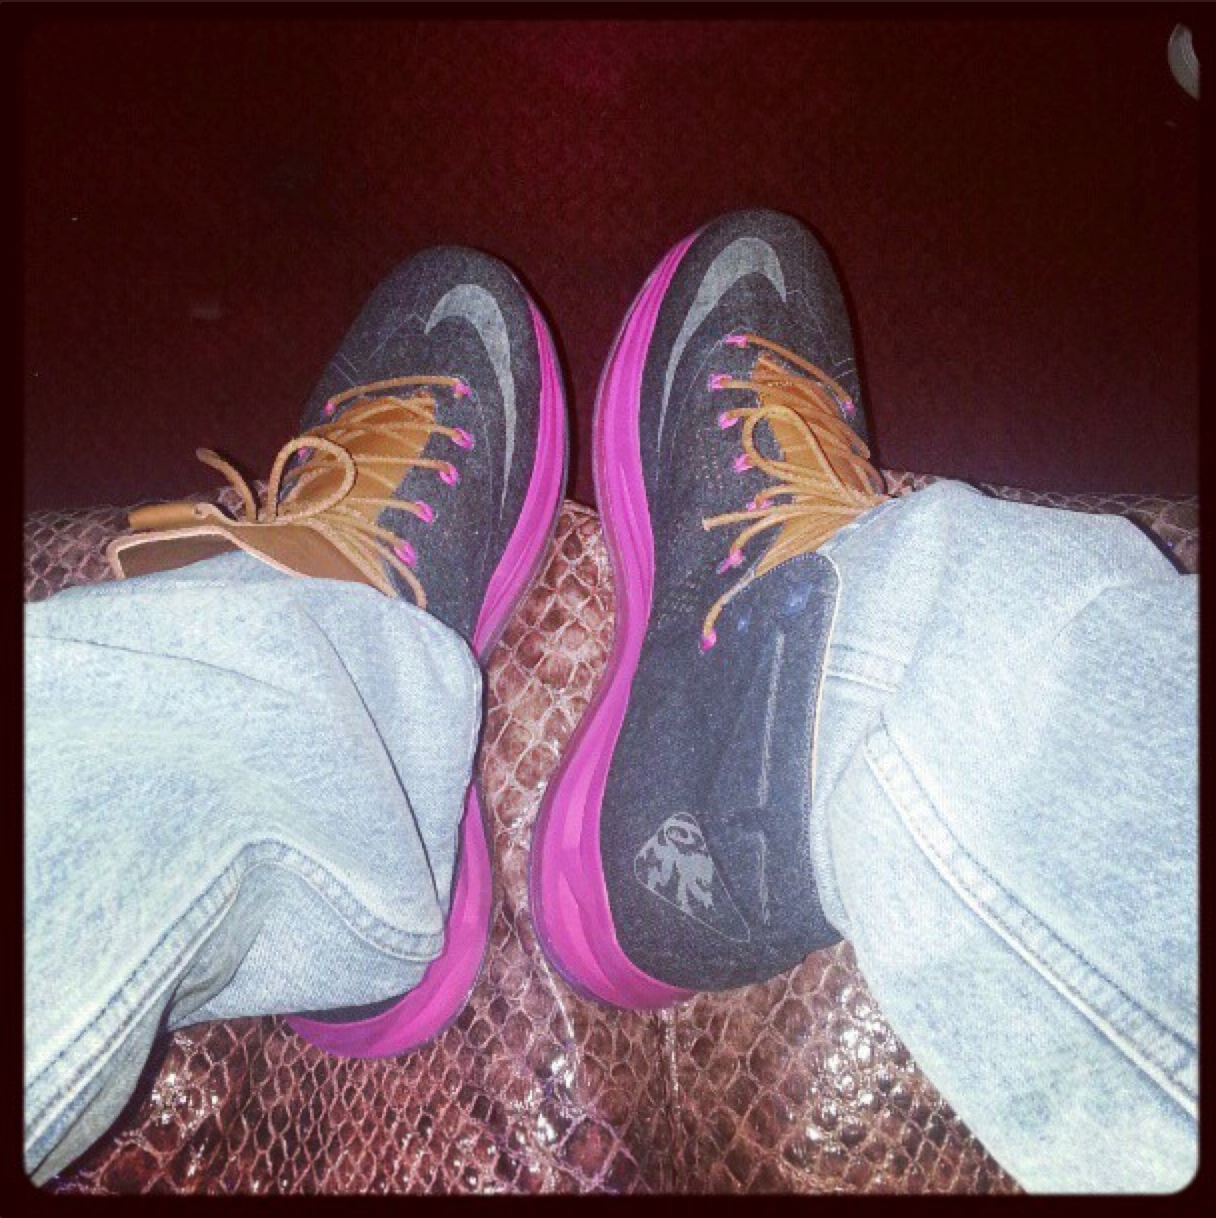 King James Laces Up the Nike LeBron X (10) ‘Denim’